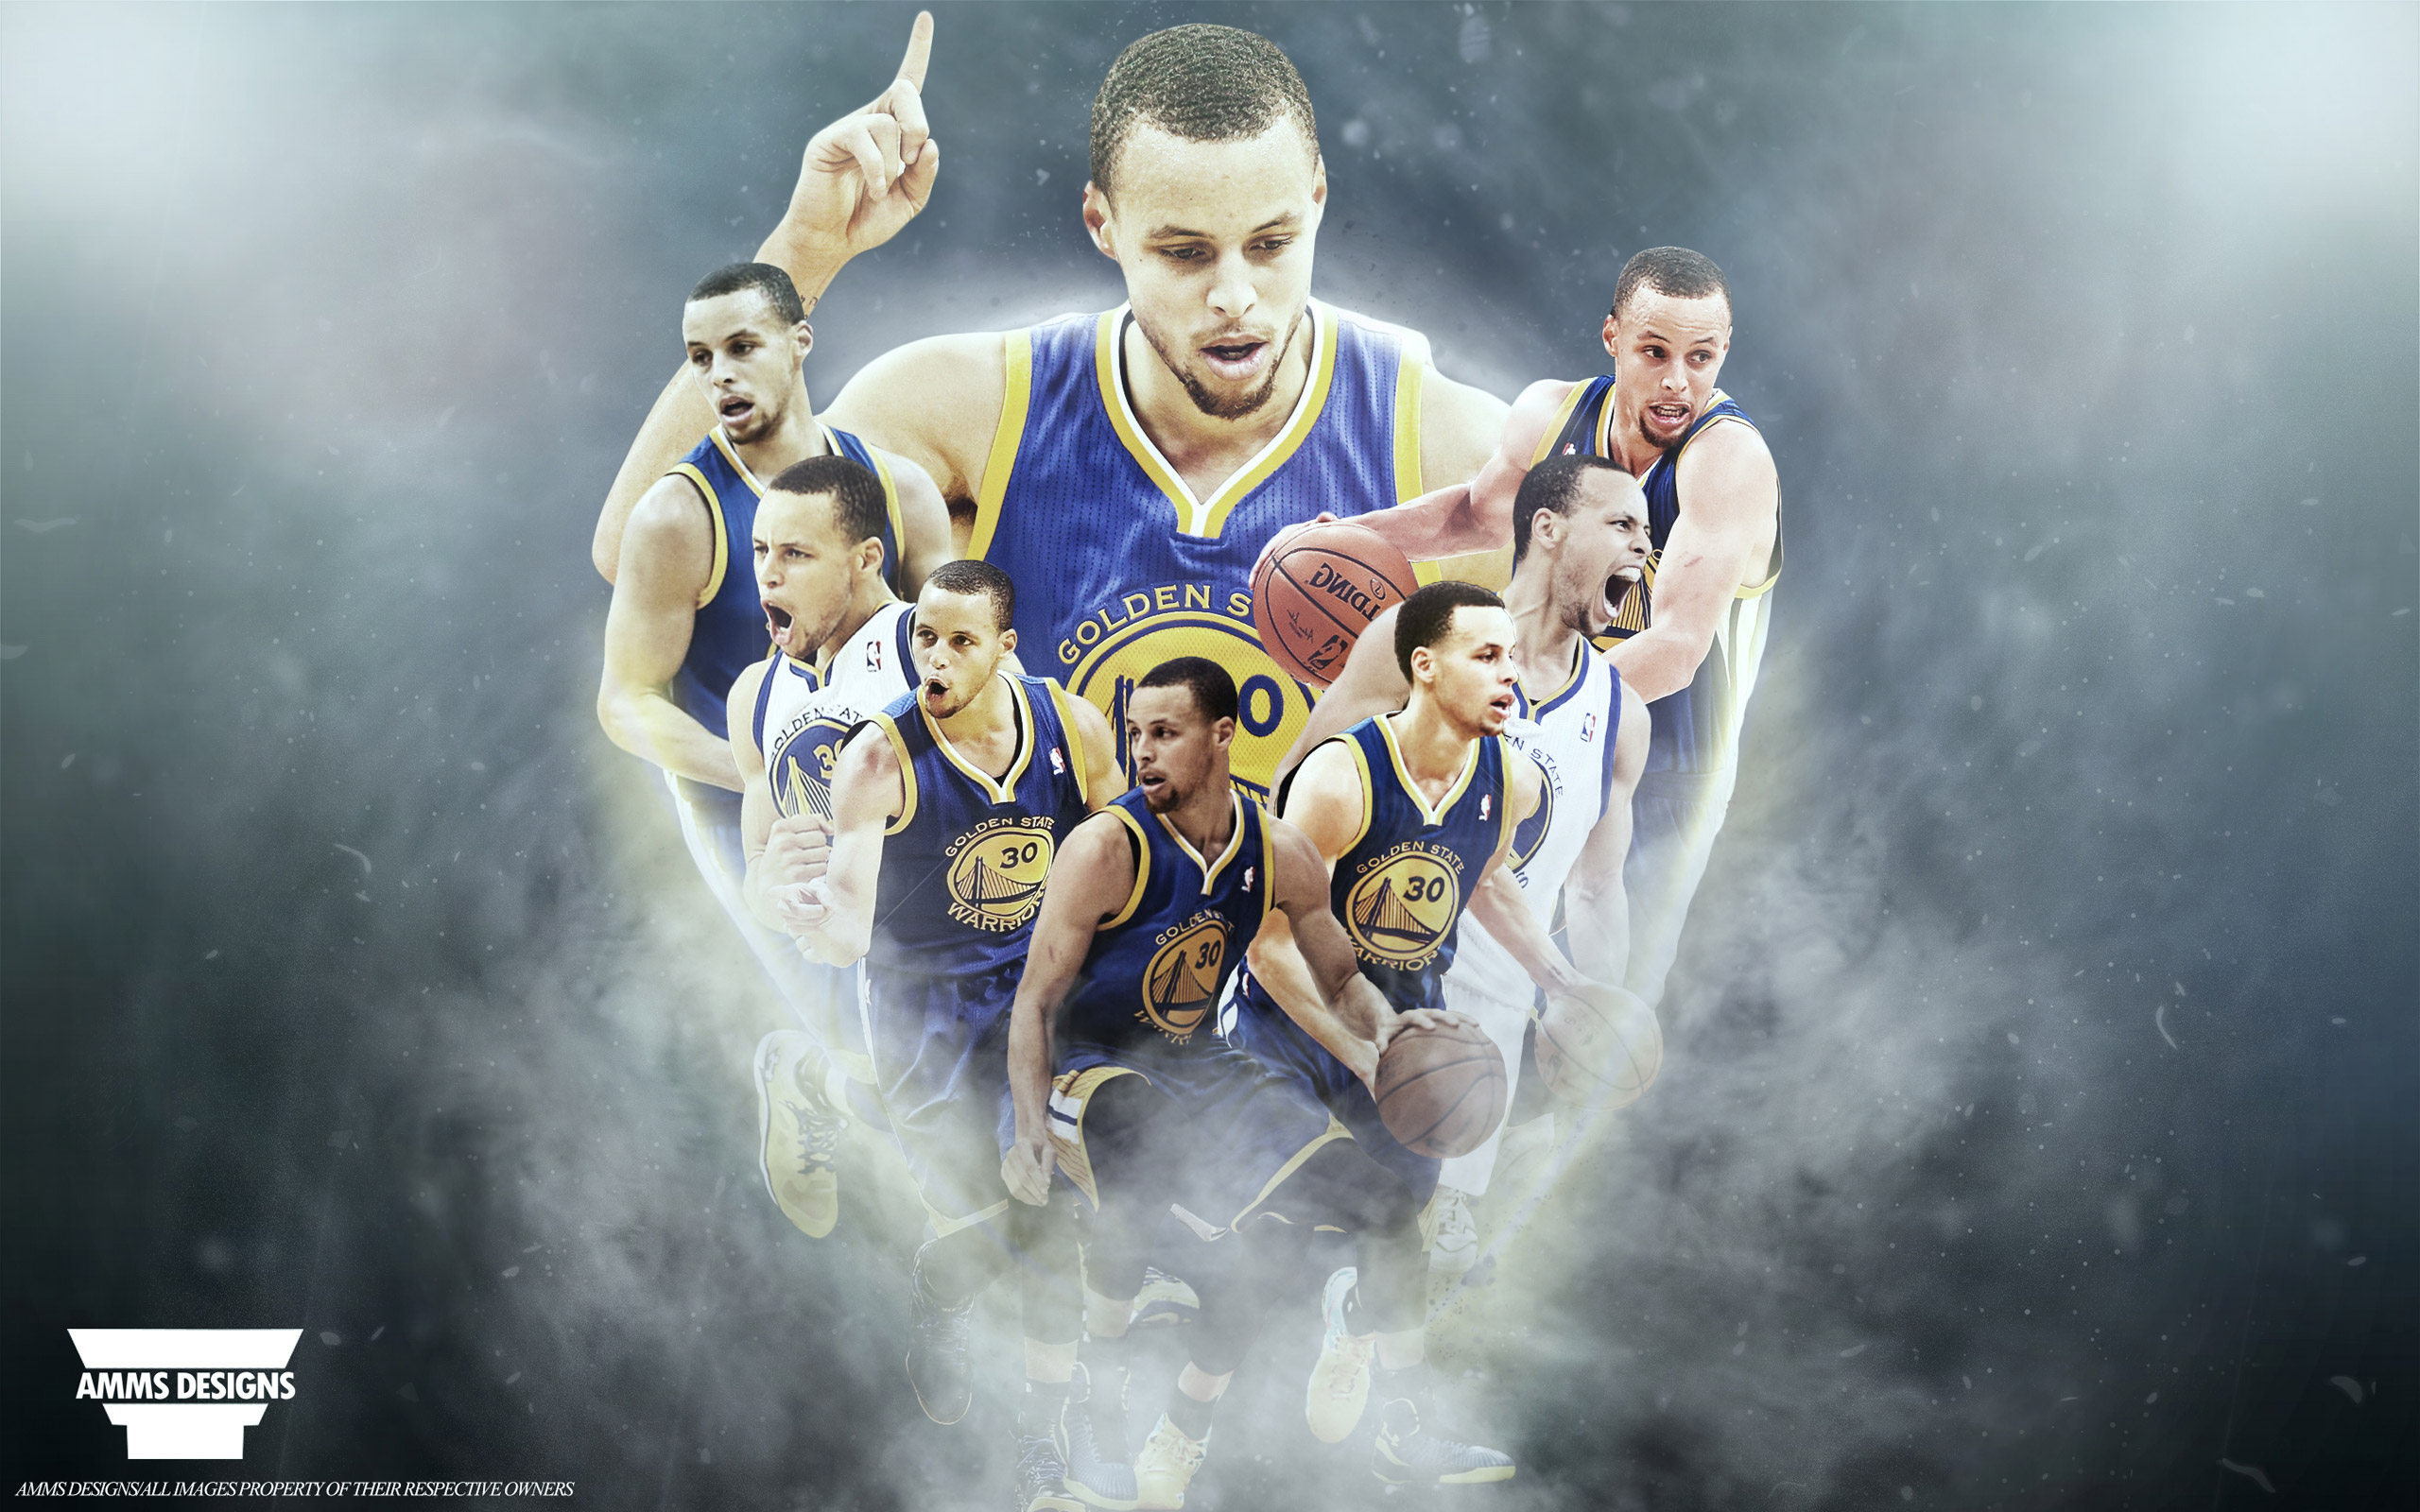 Stephen Curry 2014 2015 NBA MVP Wallpaper Basketball Wallpapers at